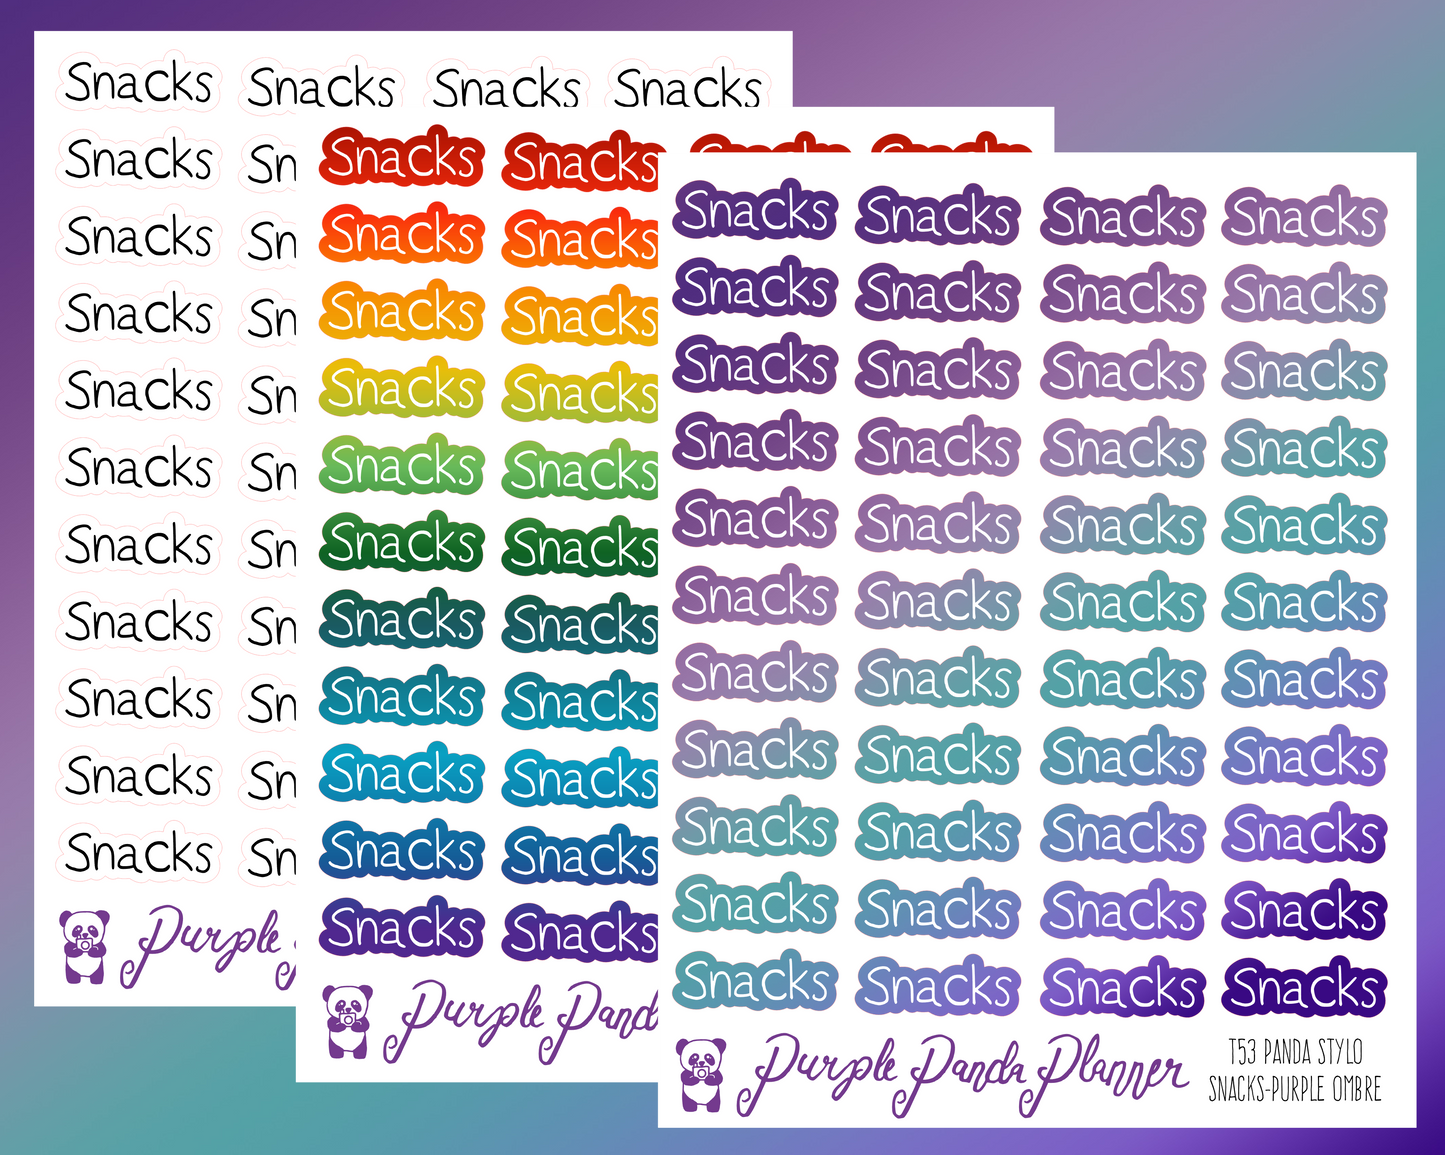 Snacks (T53) - Panda Stylo Script - Black, Rainbow, or Purple Ombre - Stickers for Planner, Journal or Calendar